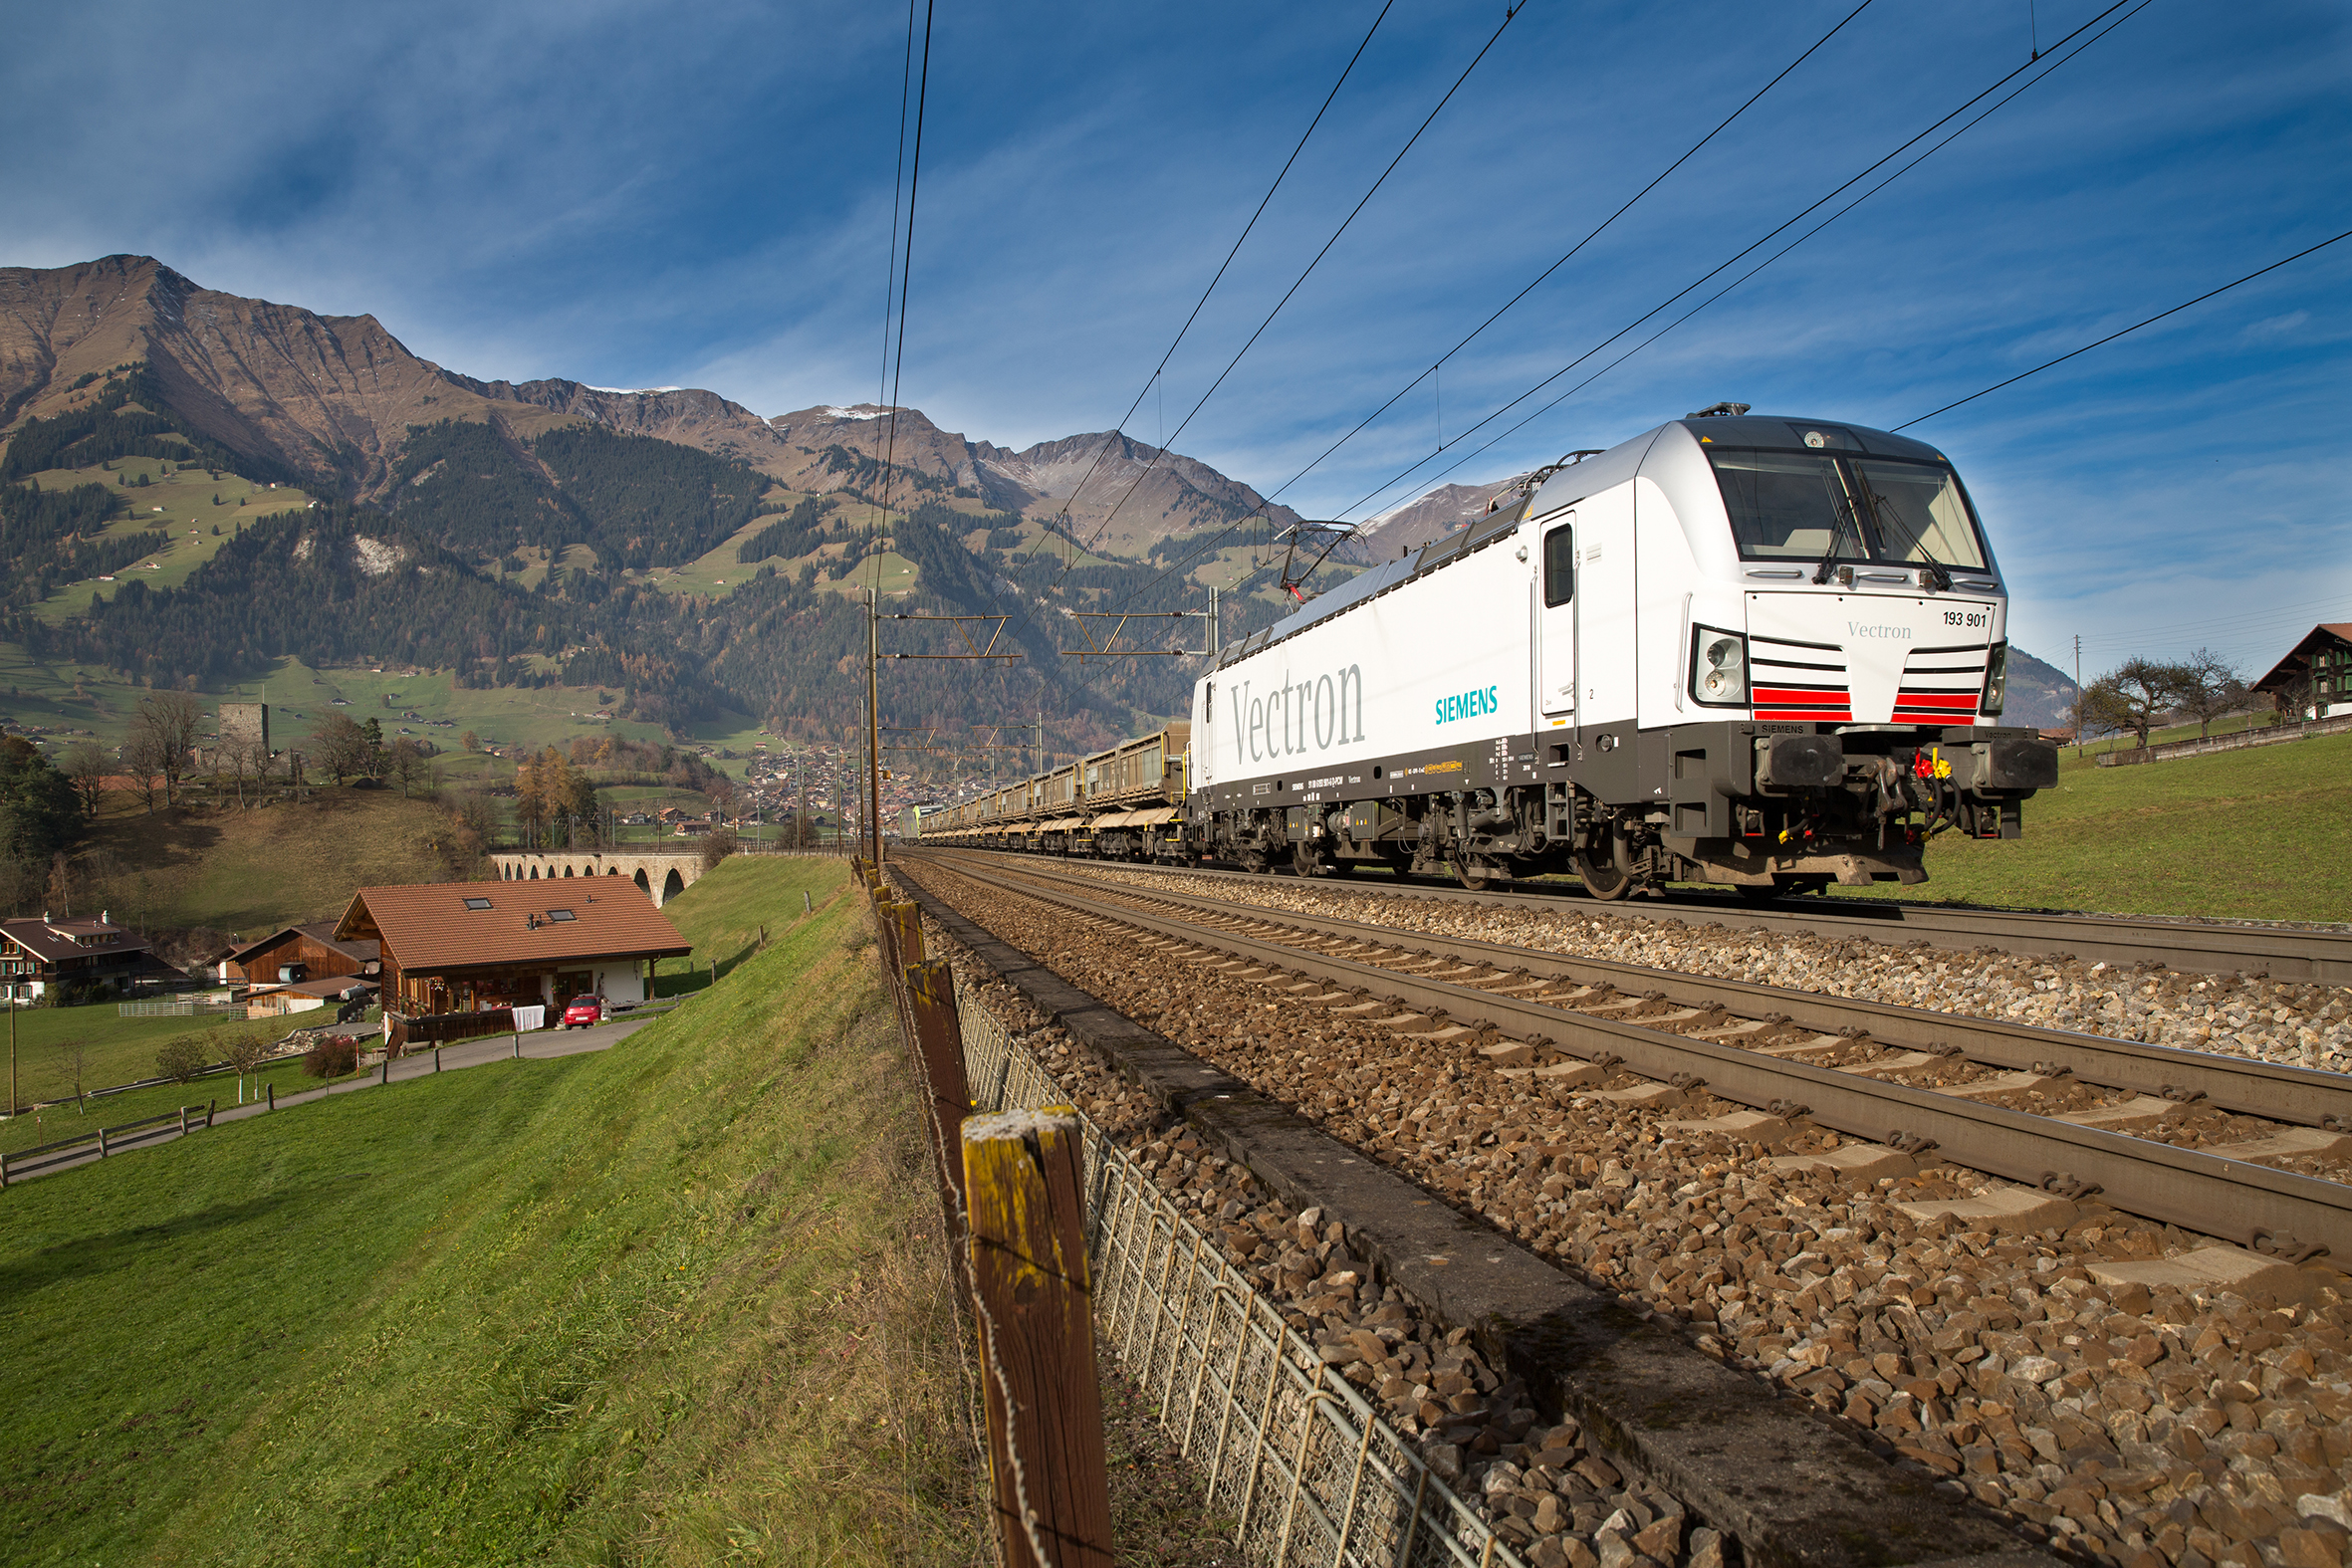 A Siemens Vectron locomotive